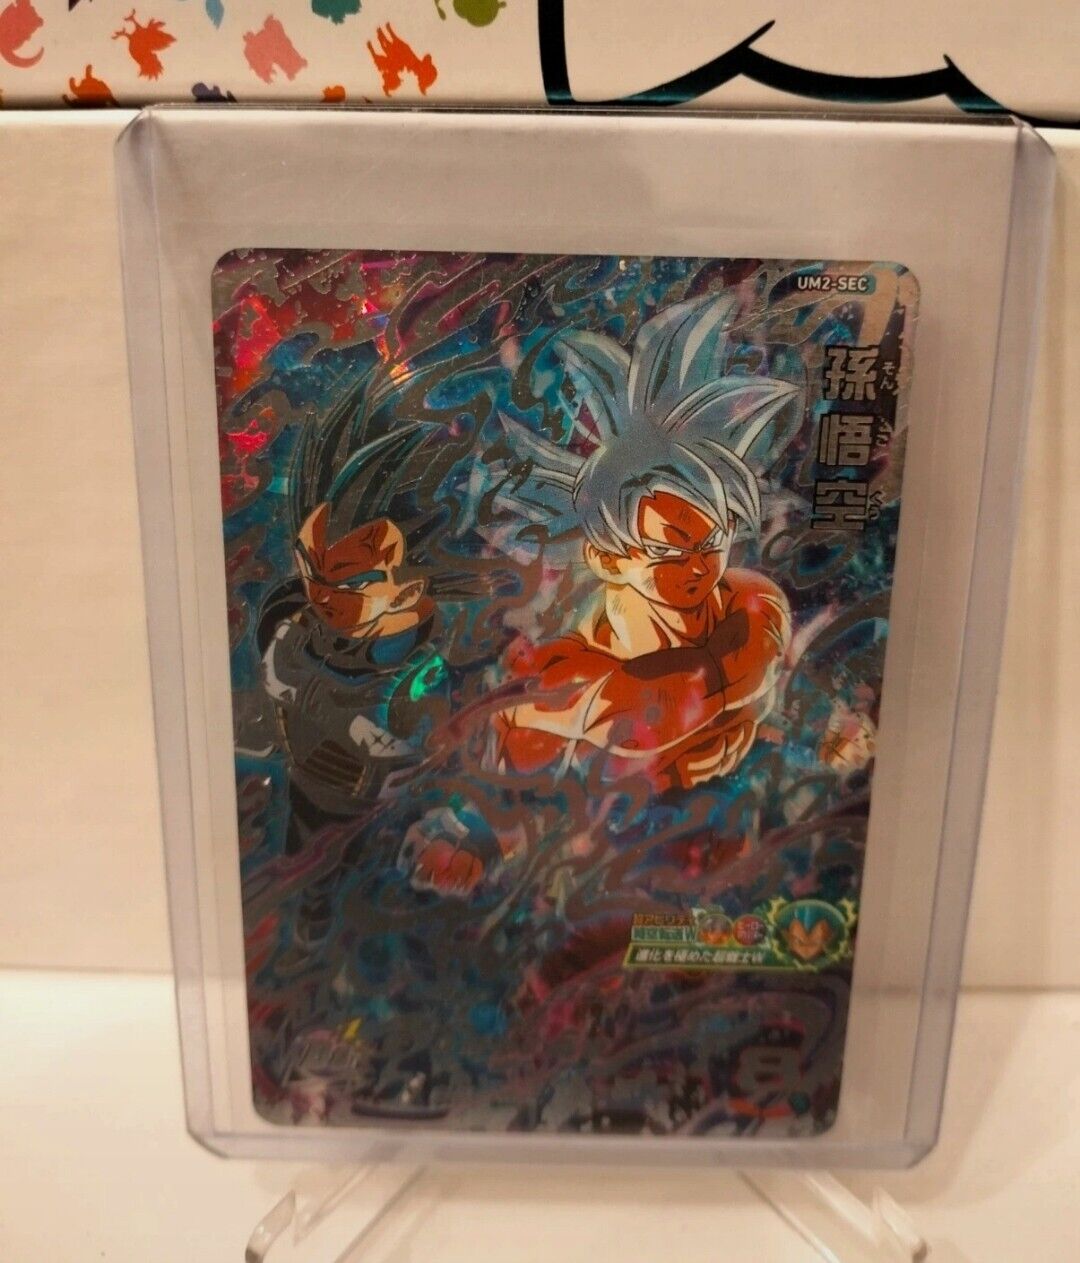 Apex of Power, Japan, Son Goku UI, Dragonball Heroes, UM2-Sec